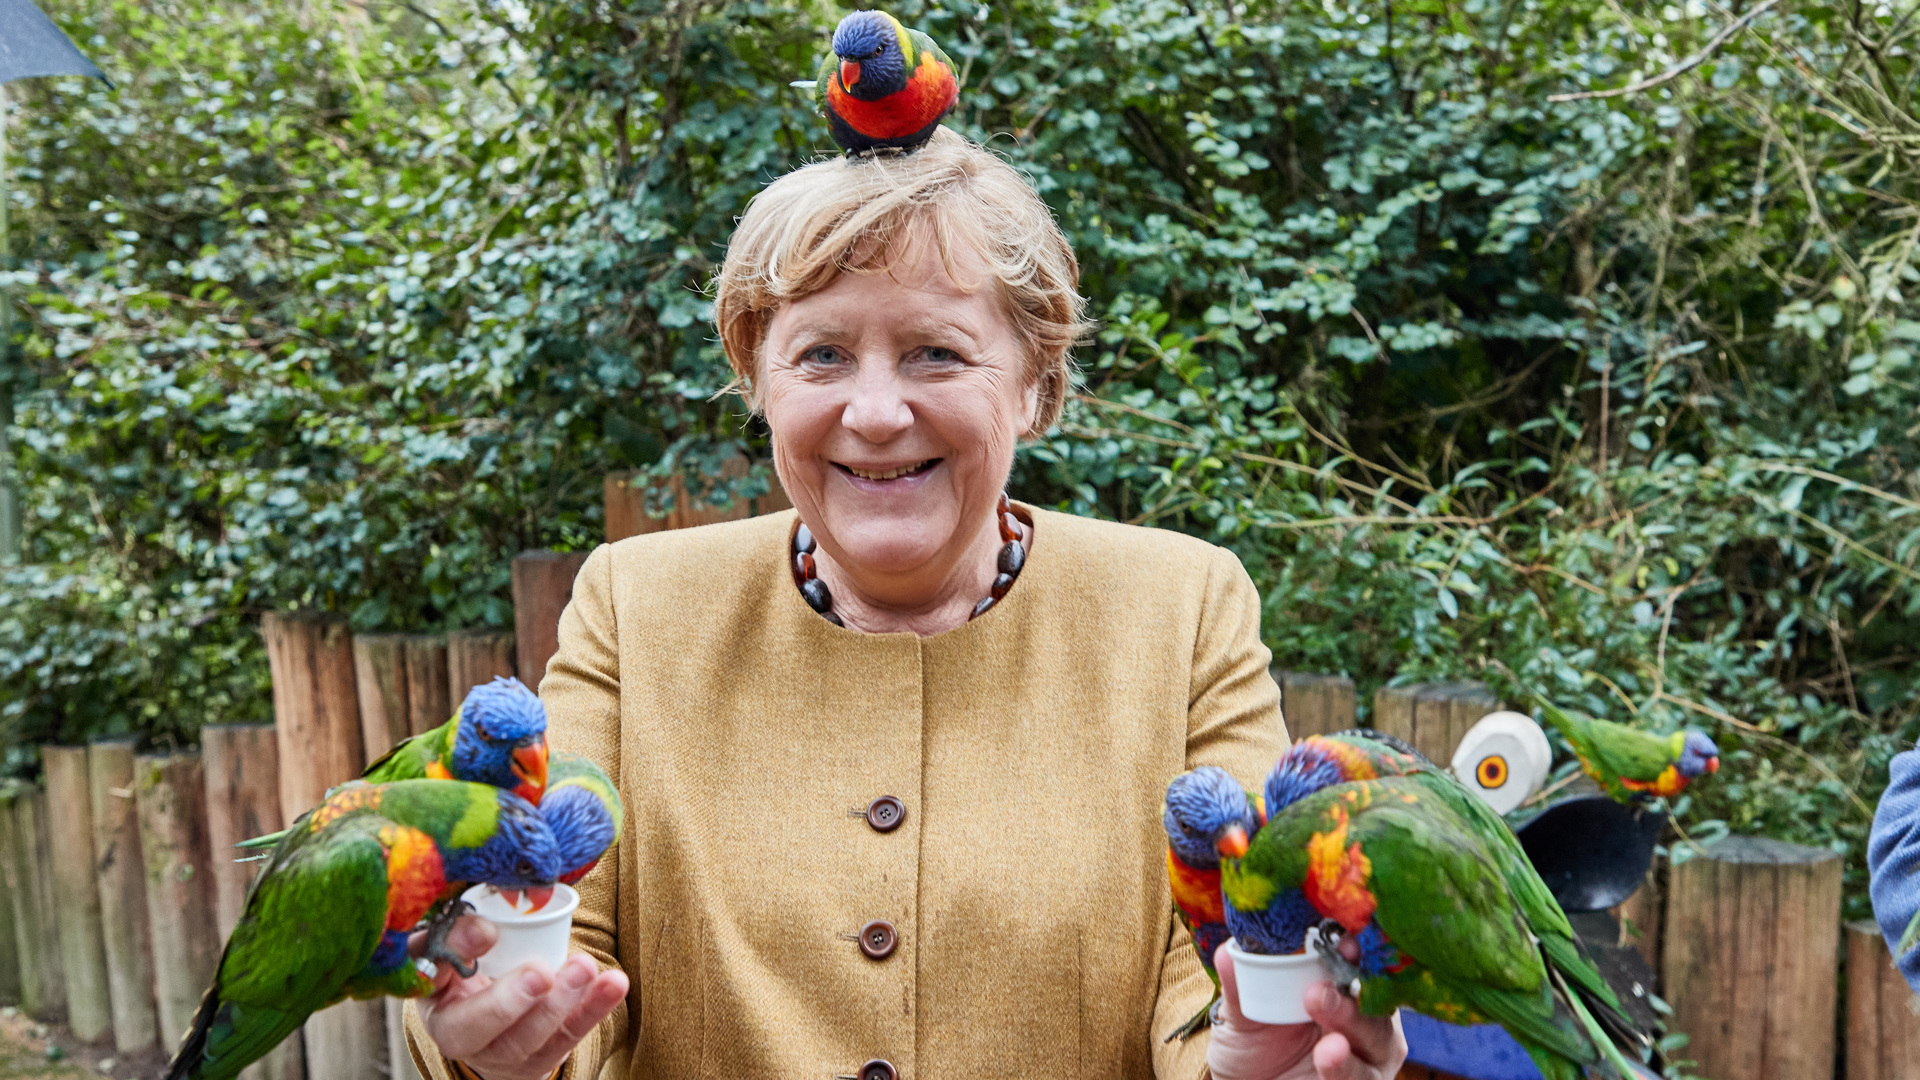 Merkel Parrot